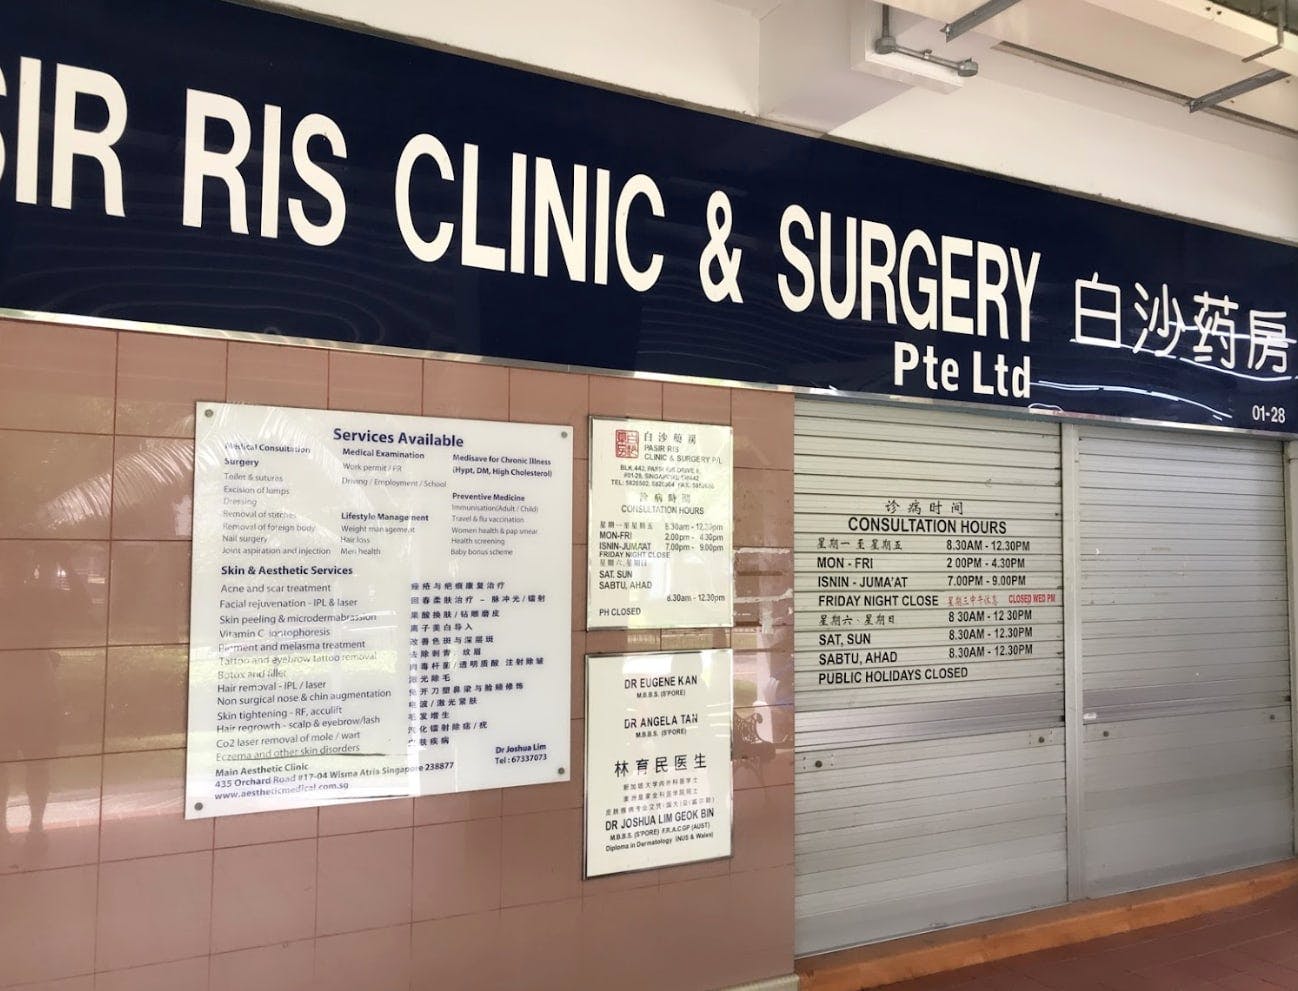 Pasir Ris Clinic & Surgery Pte Ltd